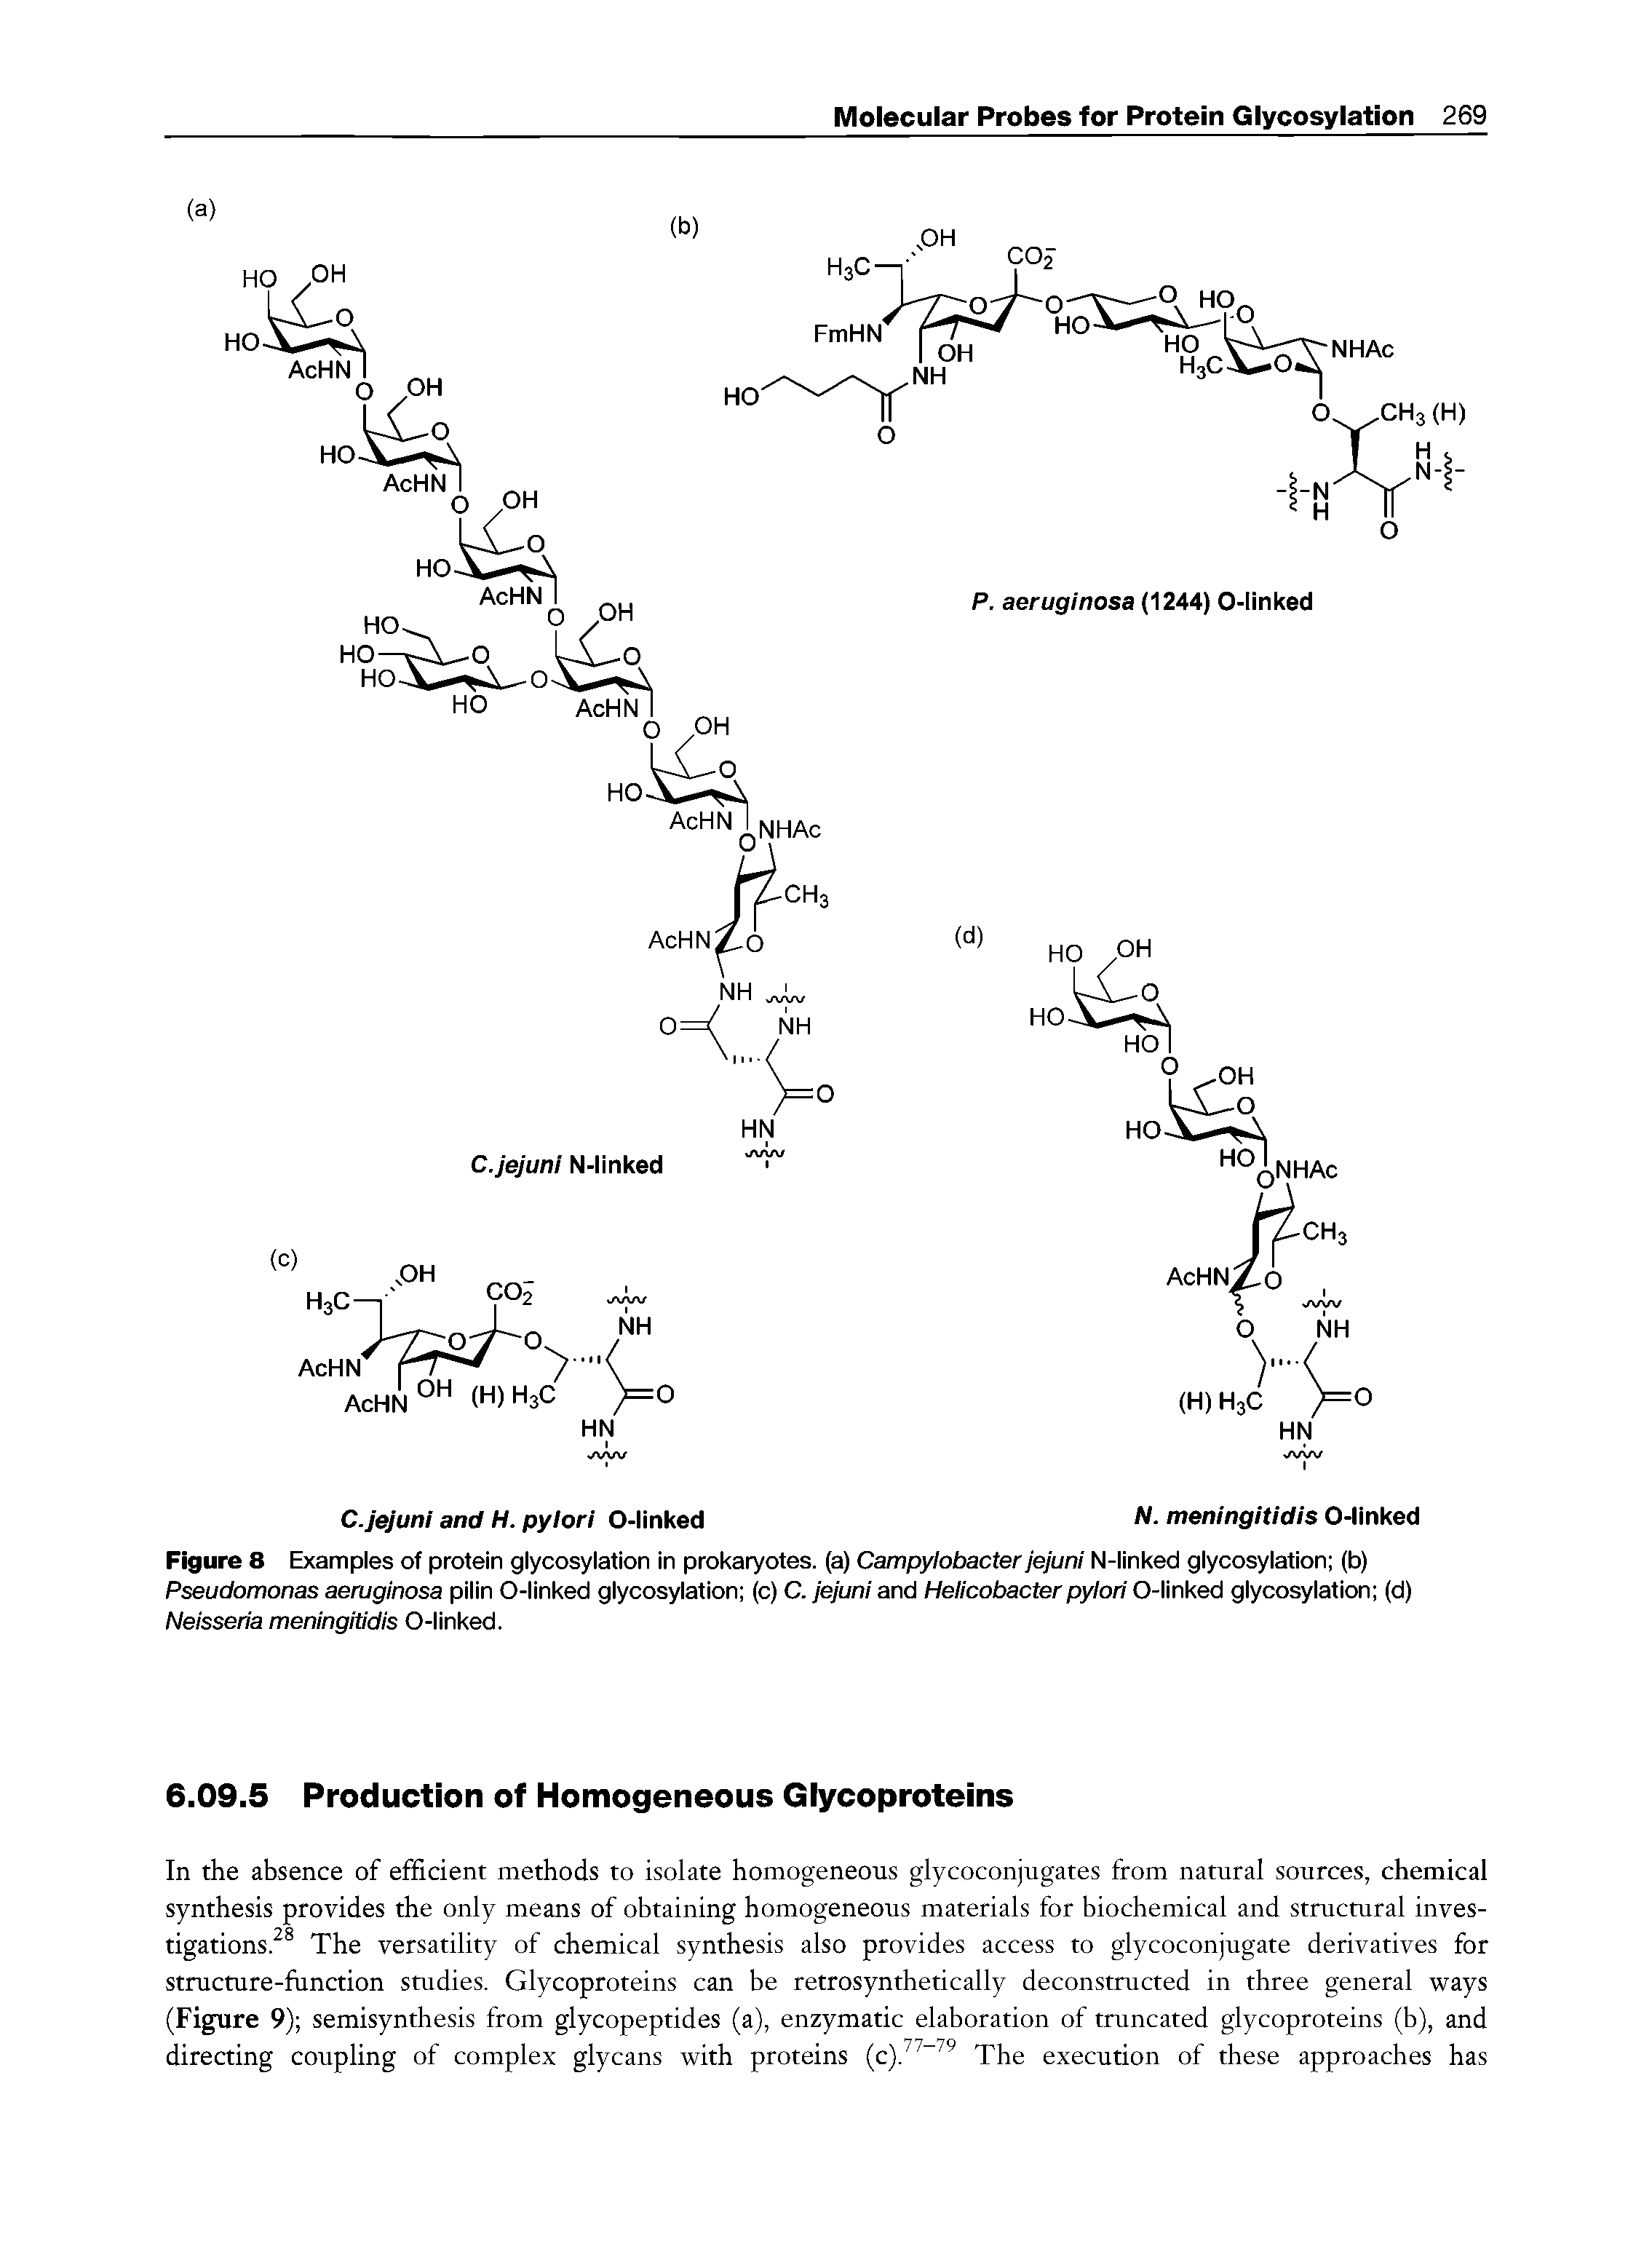 Figure 8 Examples of protein glycosylation in prokaryotes, (a) Campyiobacter jejuni N-linked glycosylation (b) Pseudomonas aeruginosa pilin O-linked glycosylation (c) C. jejuni and Heiicobacterpyiori O-linked glycosylation (d) Neisseria meningitidis O-linked.